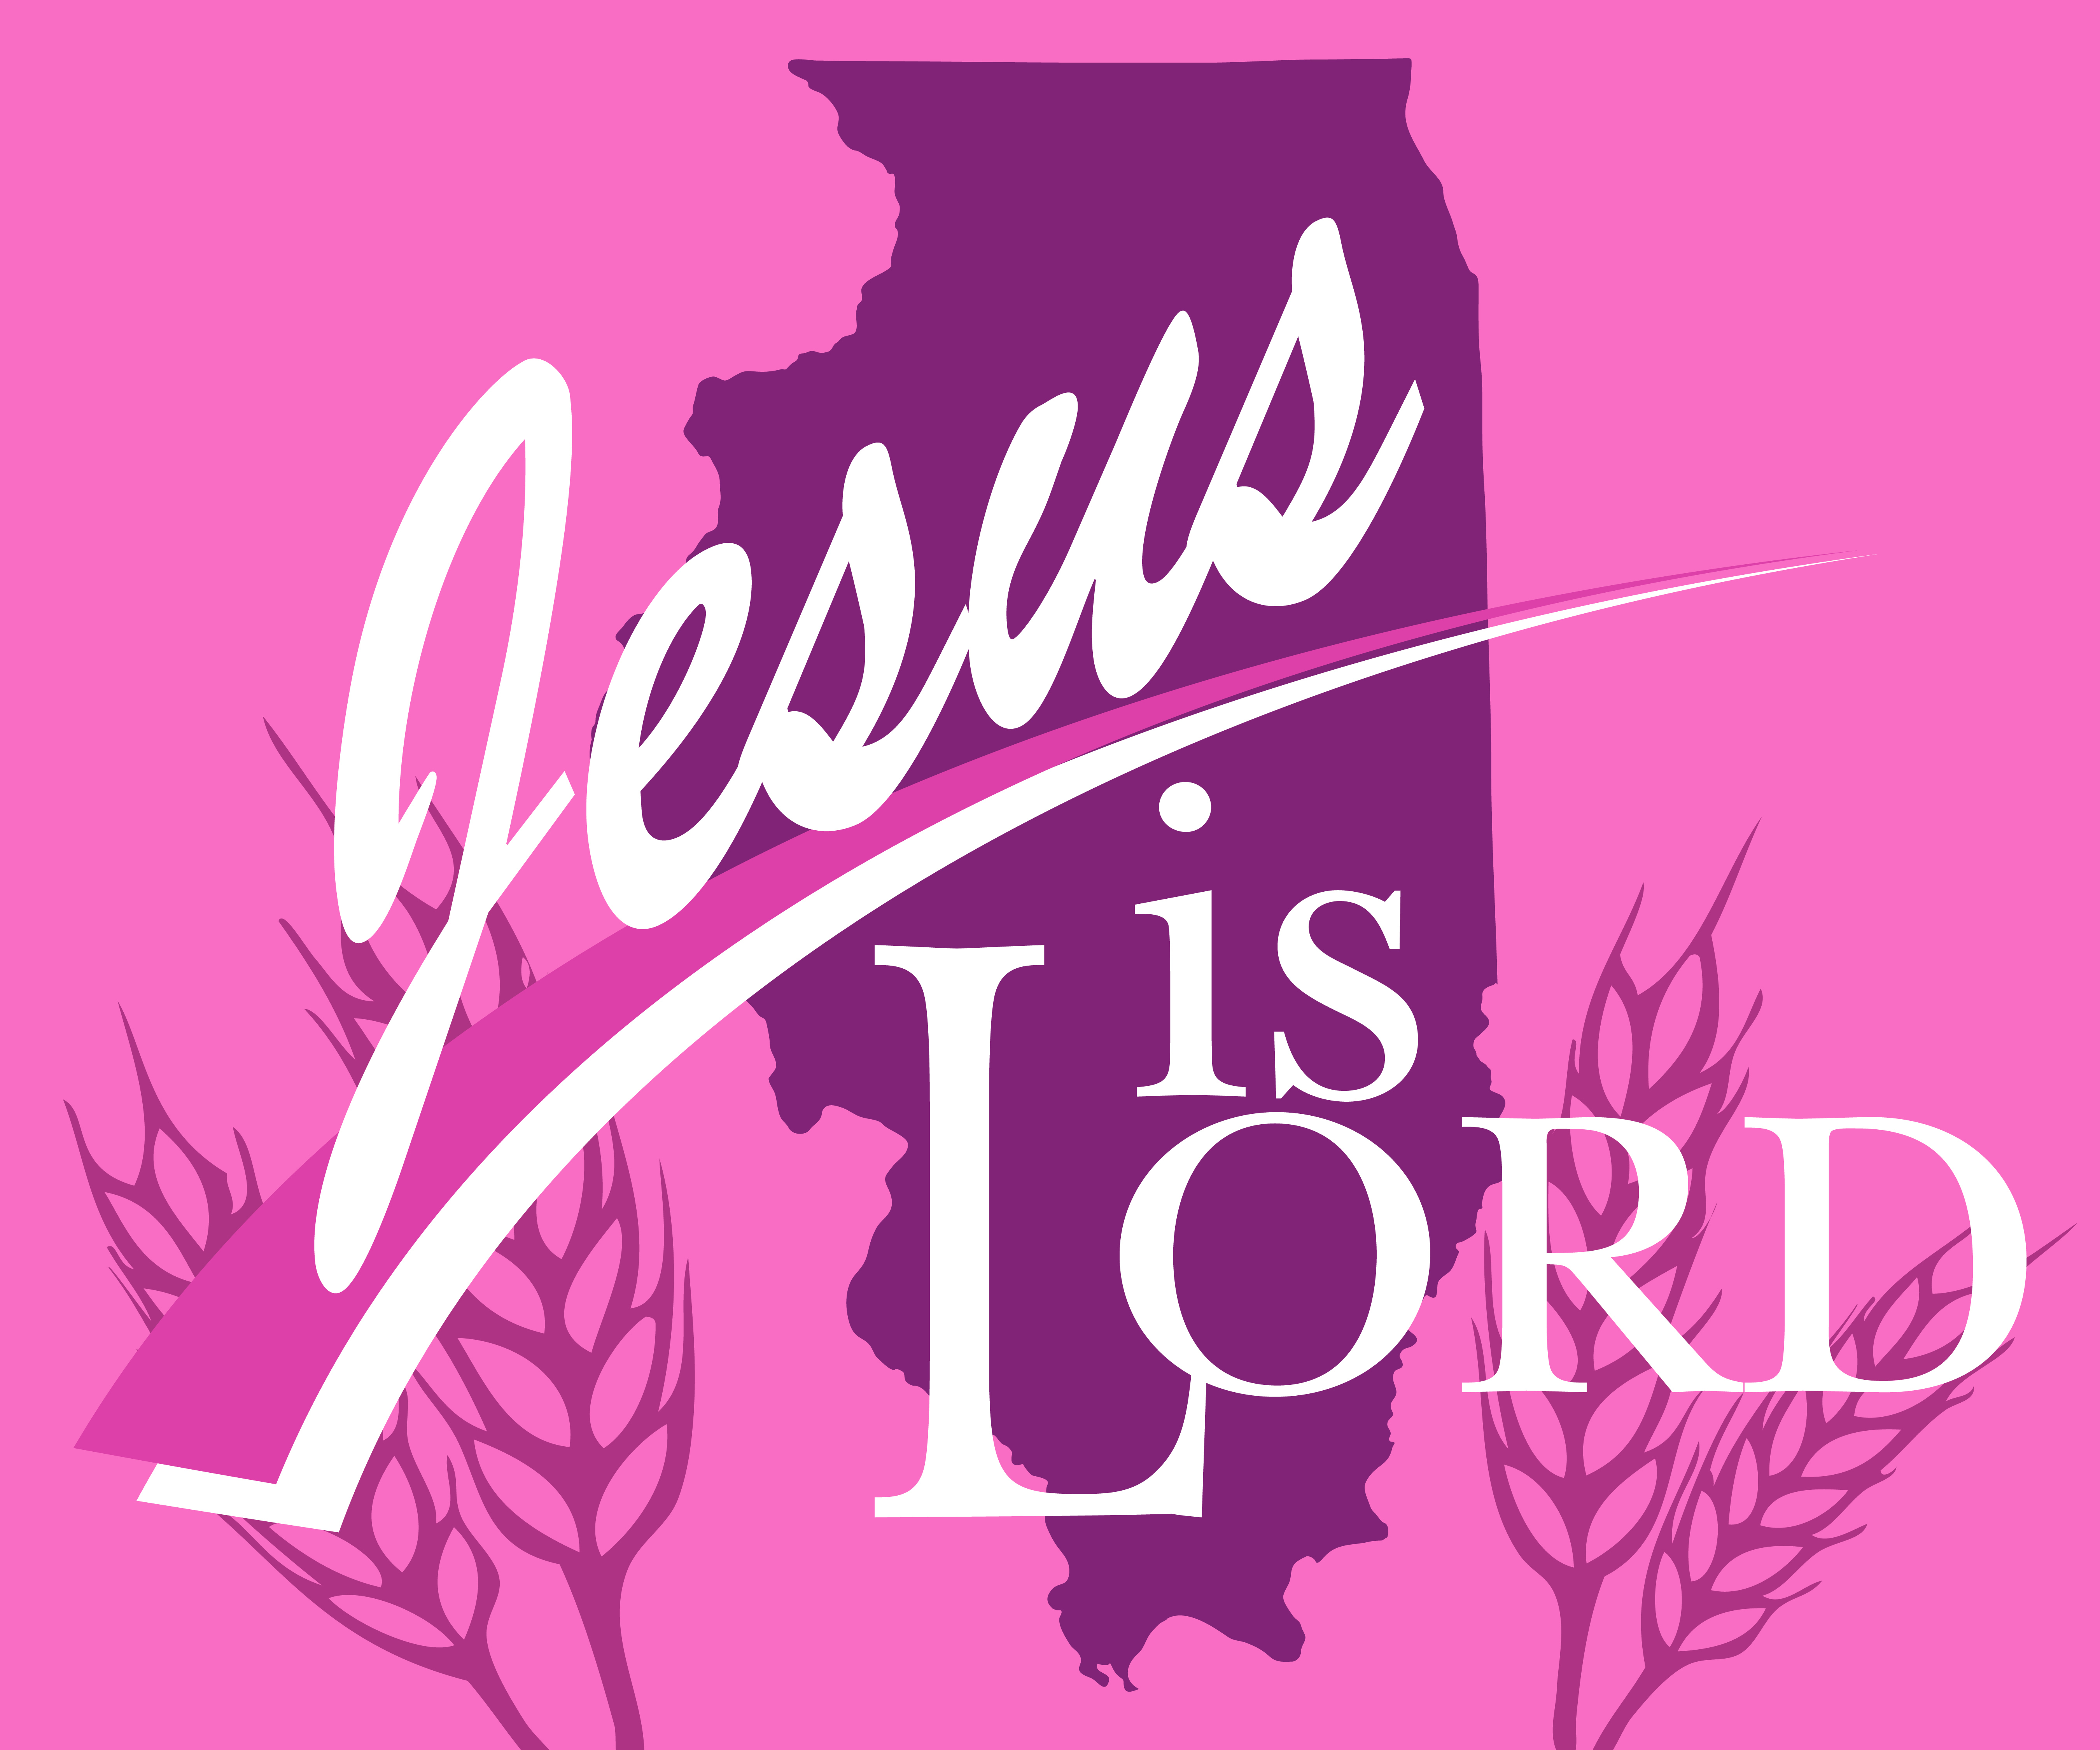 Jesus is Lord over Illinois!